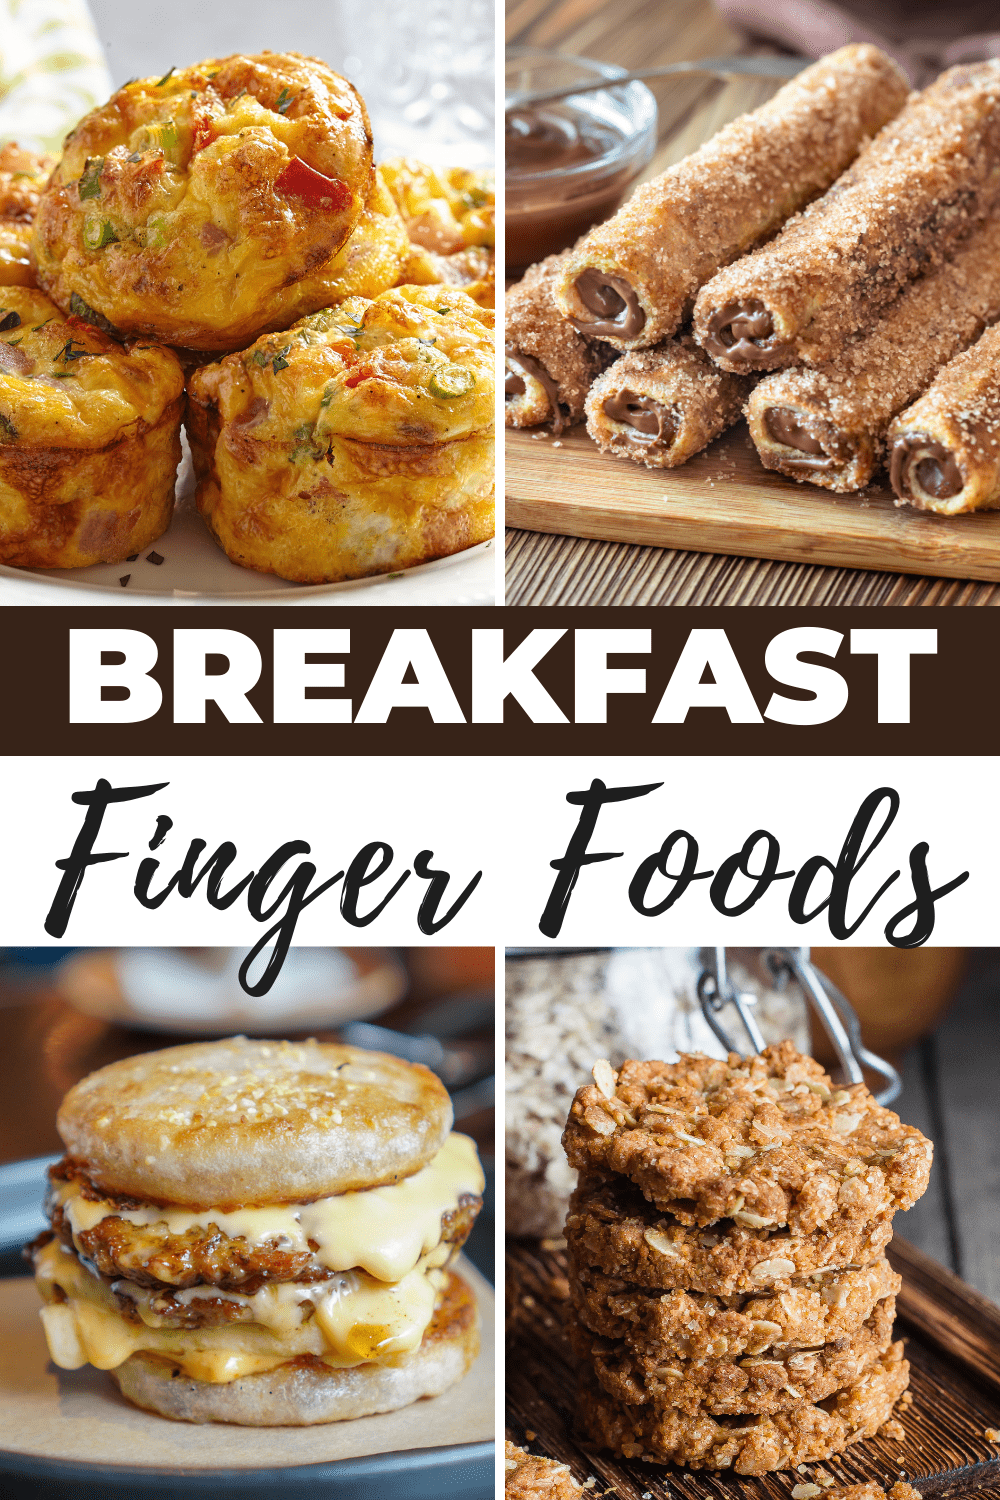 22 Breakfast Finger Foods (+ Easy Recipes) - Insanely Good